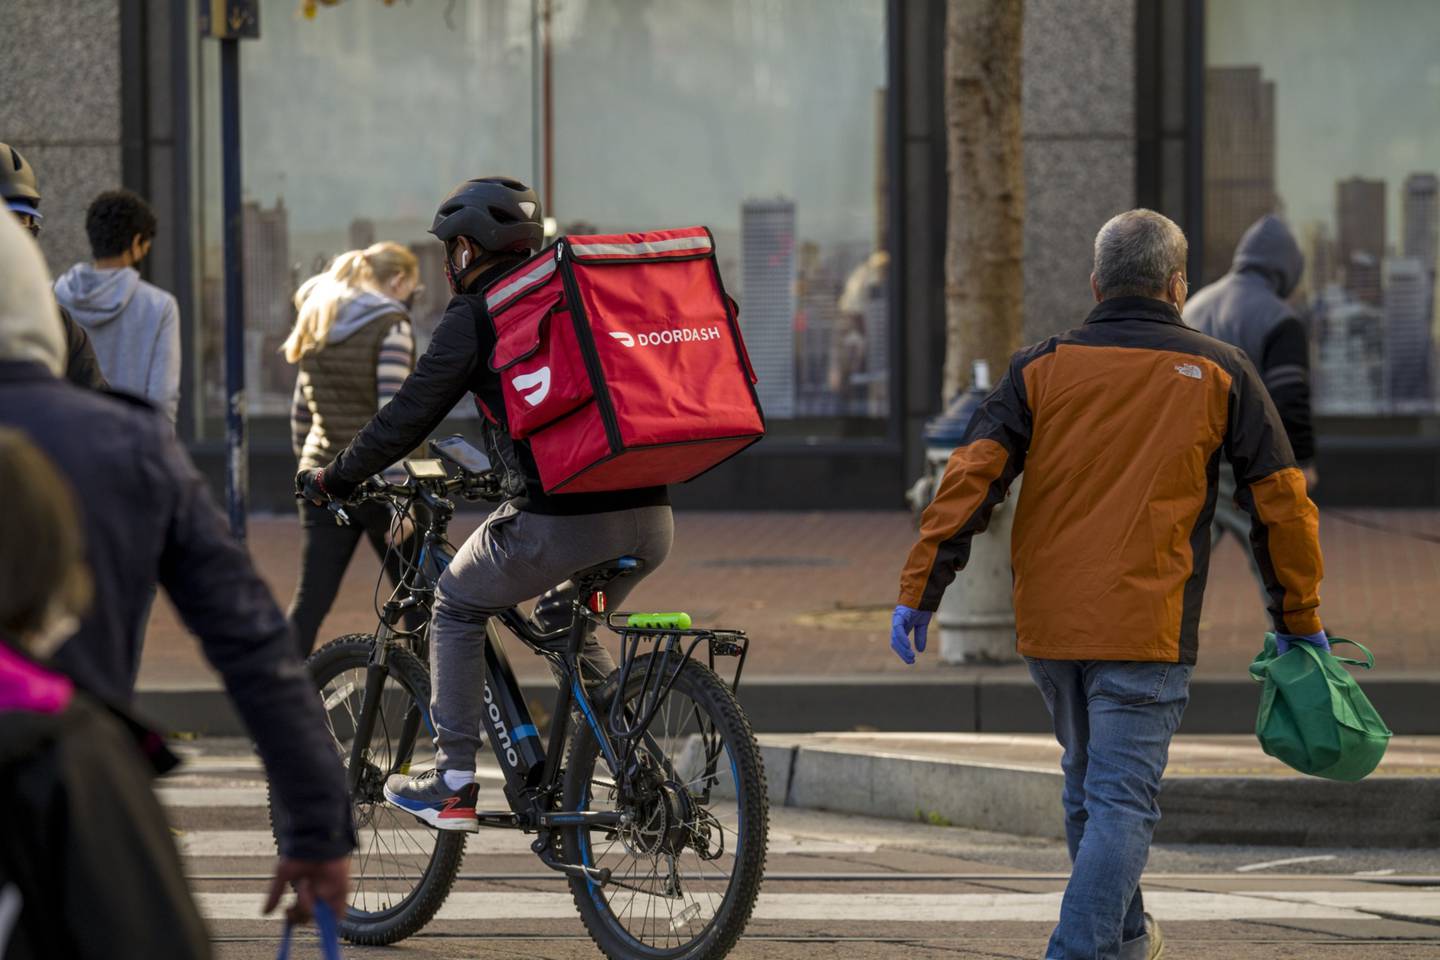 A bike messenger carries a DoorDash Inc. bag in San Francisco, California.